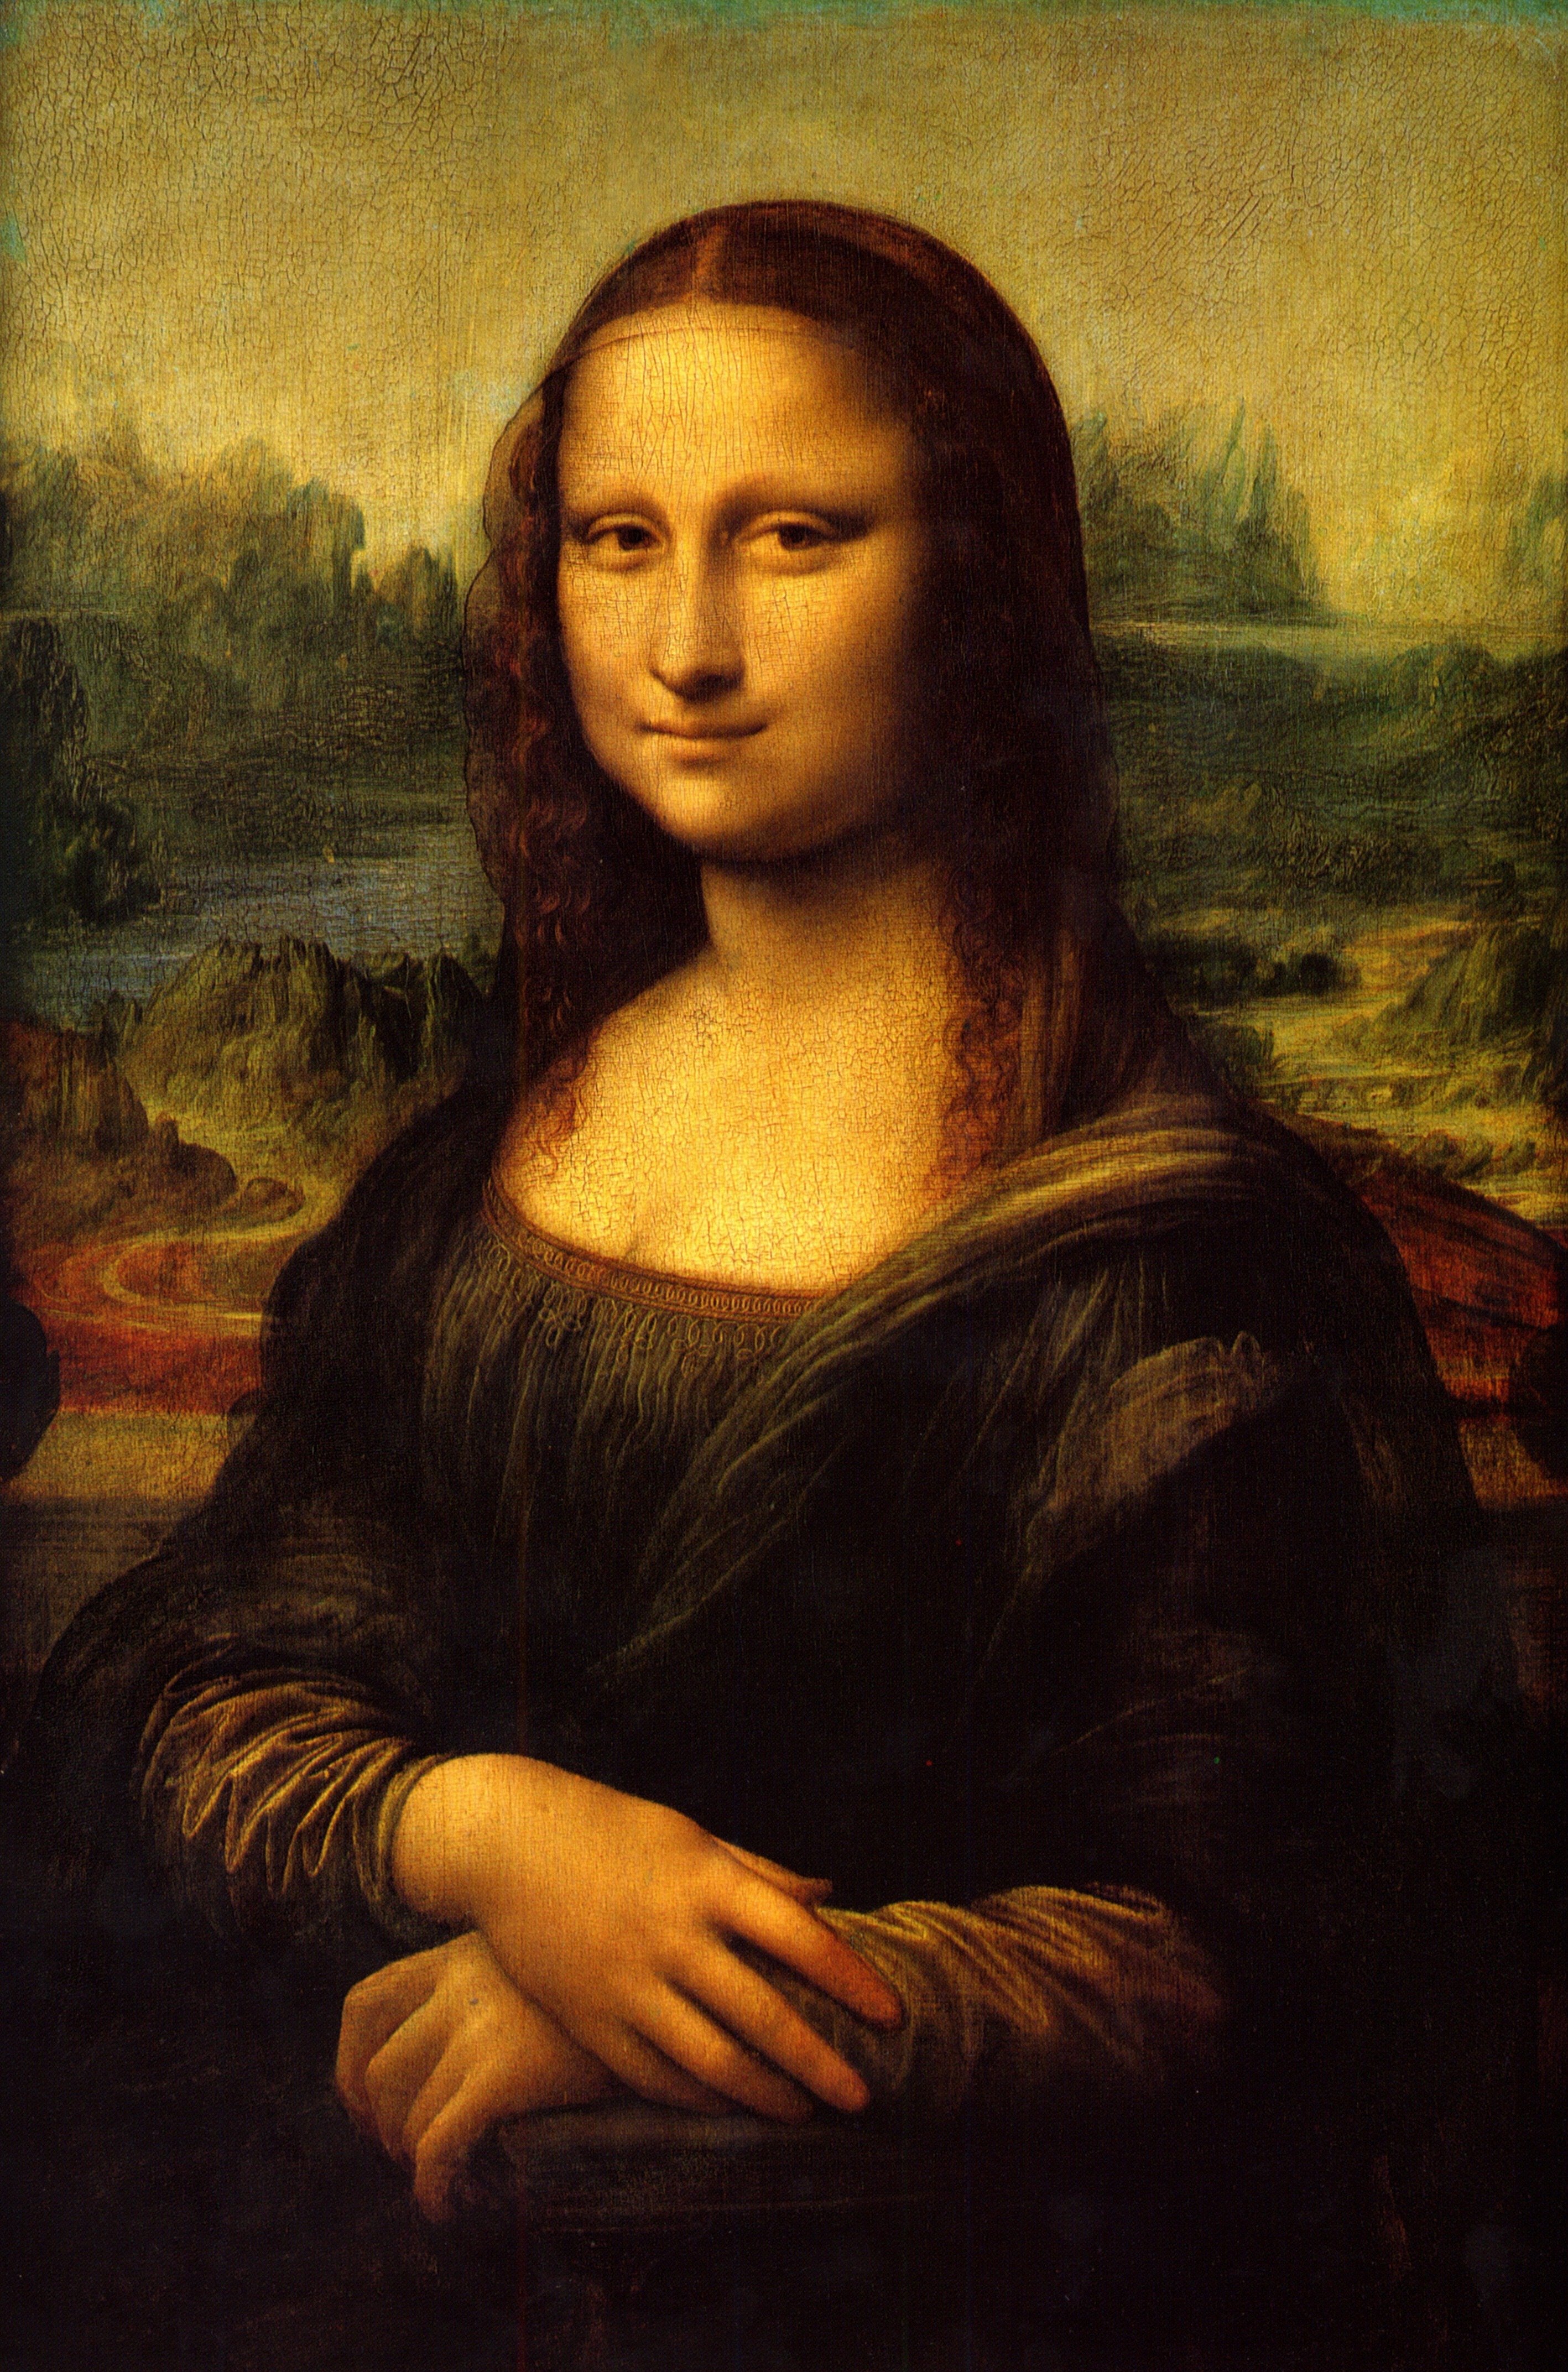 Mona Lisa's secret? The eyes have it